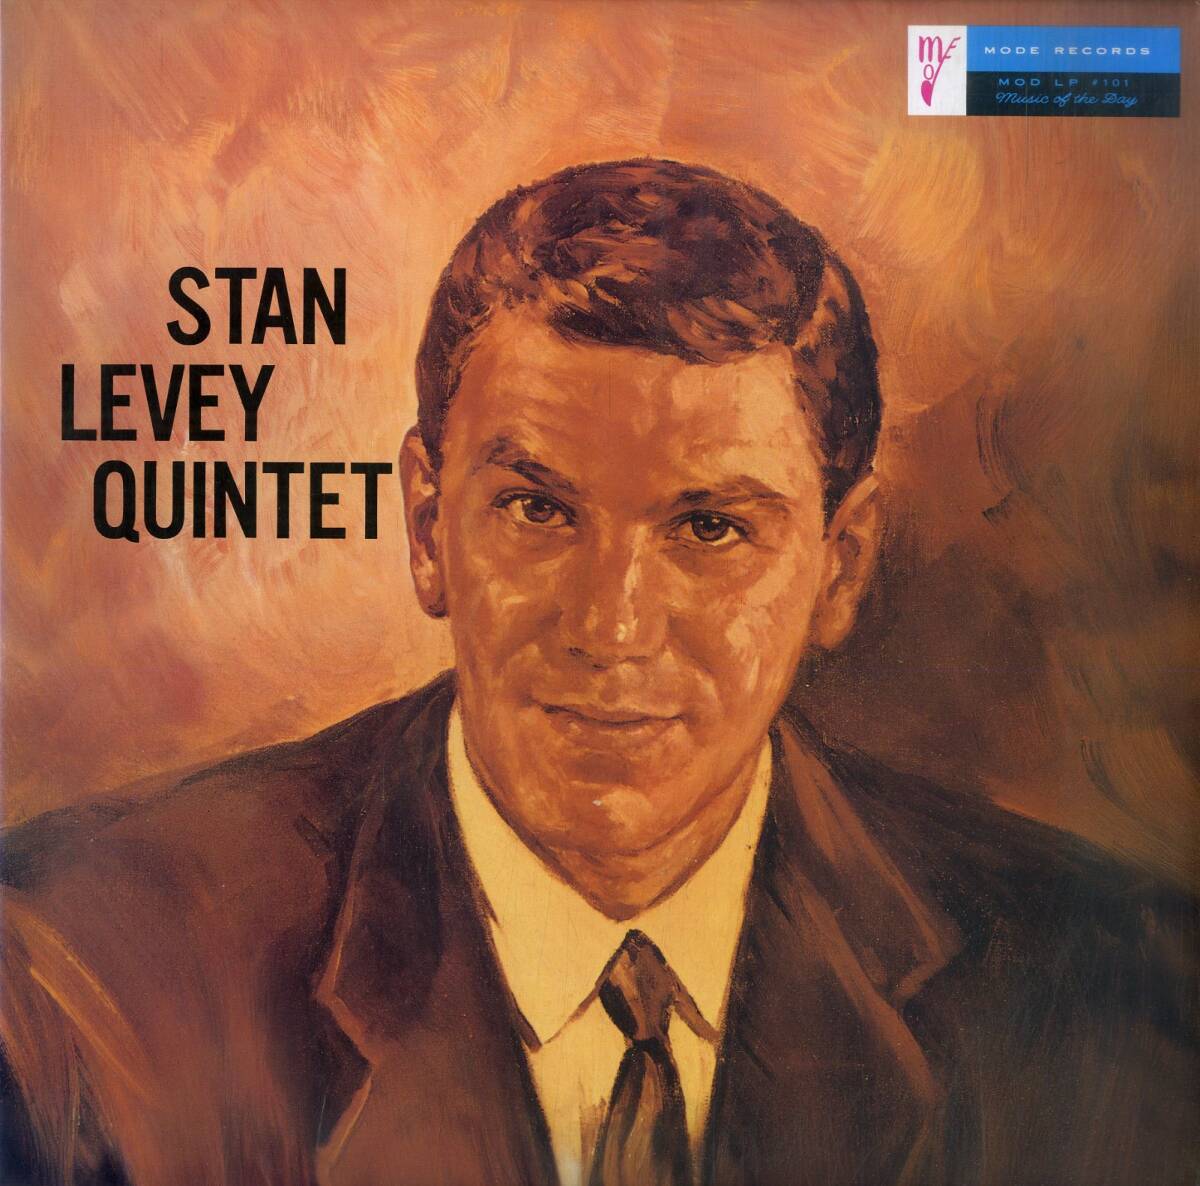 A00592067/LP/スタン・リービー・クインテット「Stan Levey Quintet (1988年・MOD-LP-101・183g重量盤・クールジャズ)」_画像1